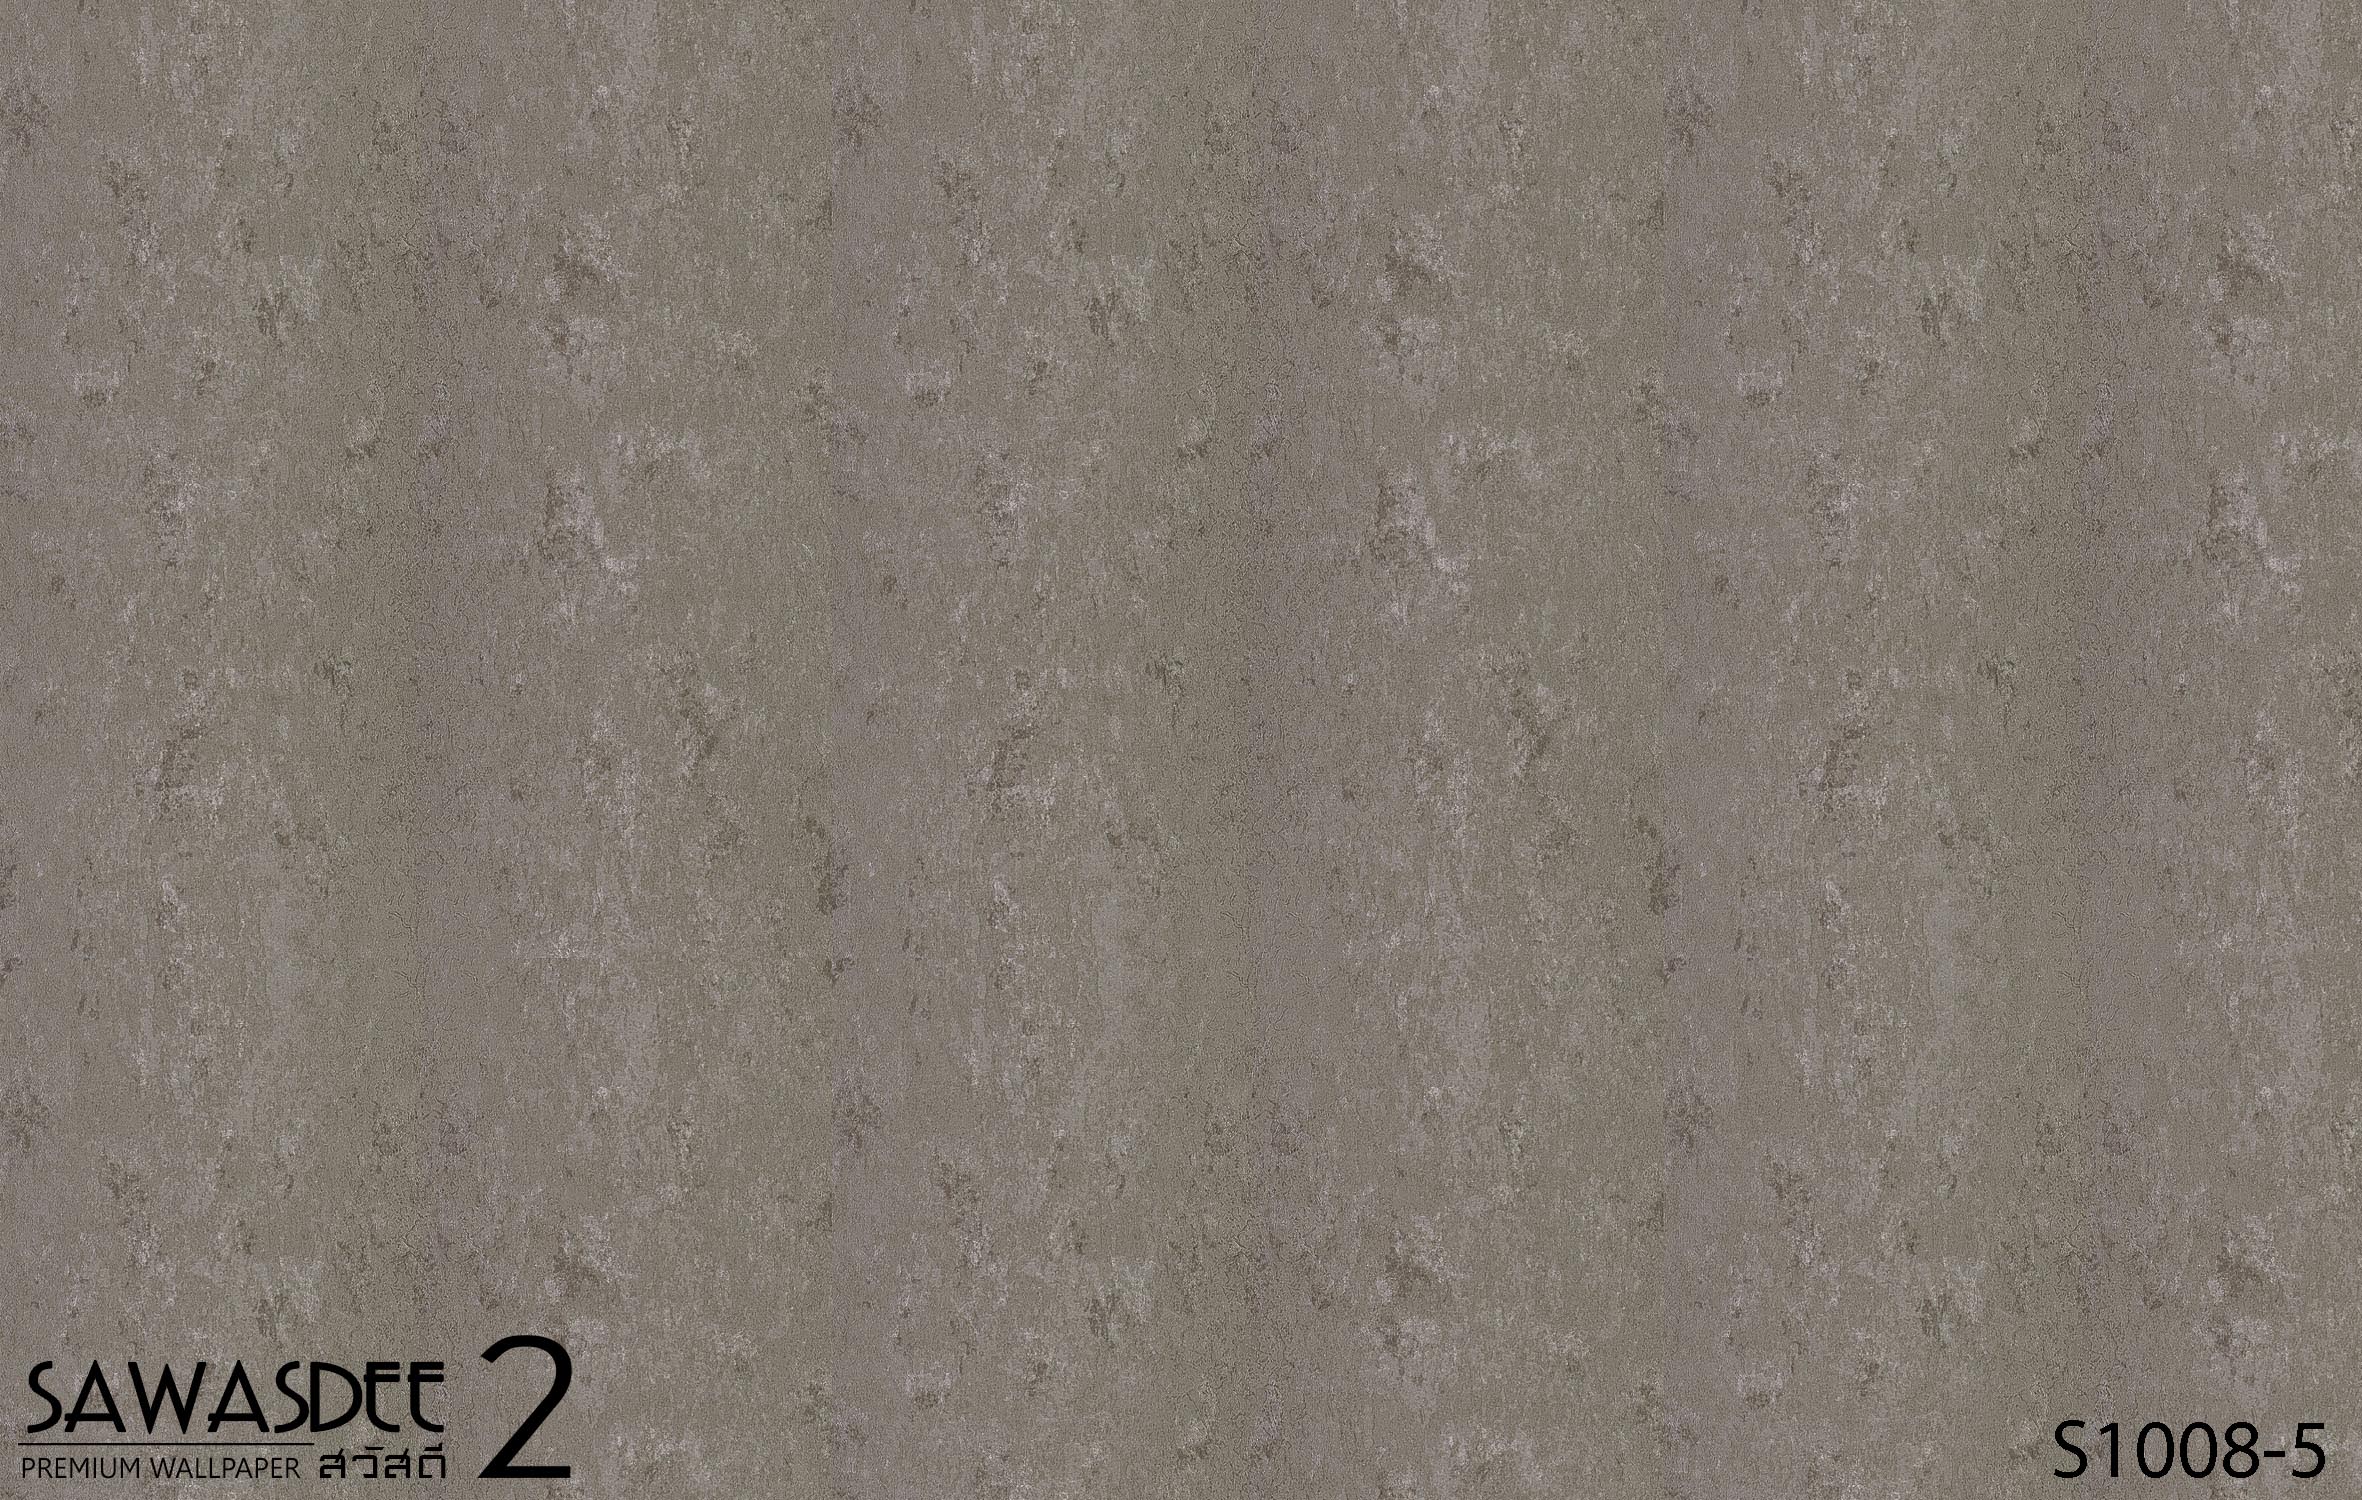 Wallpaper (SAWASDEE 2) S1008-5